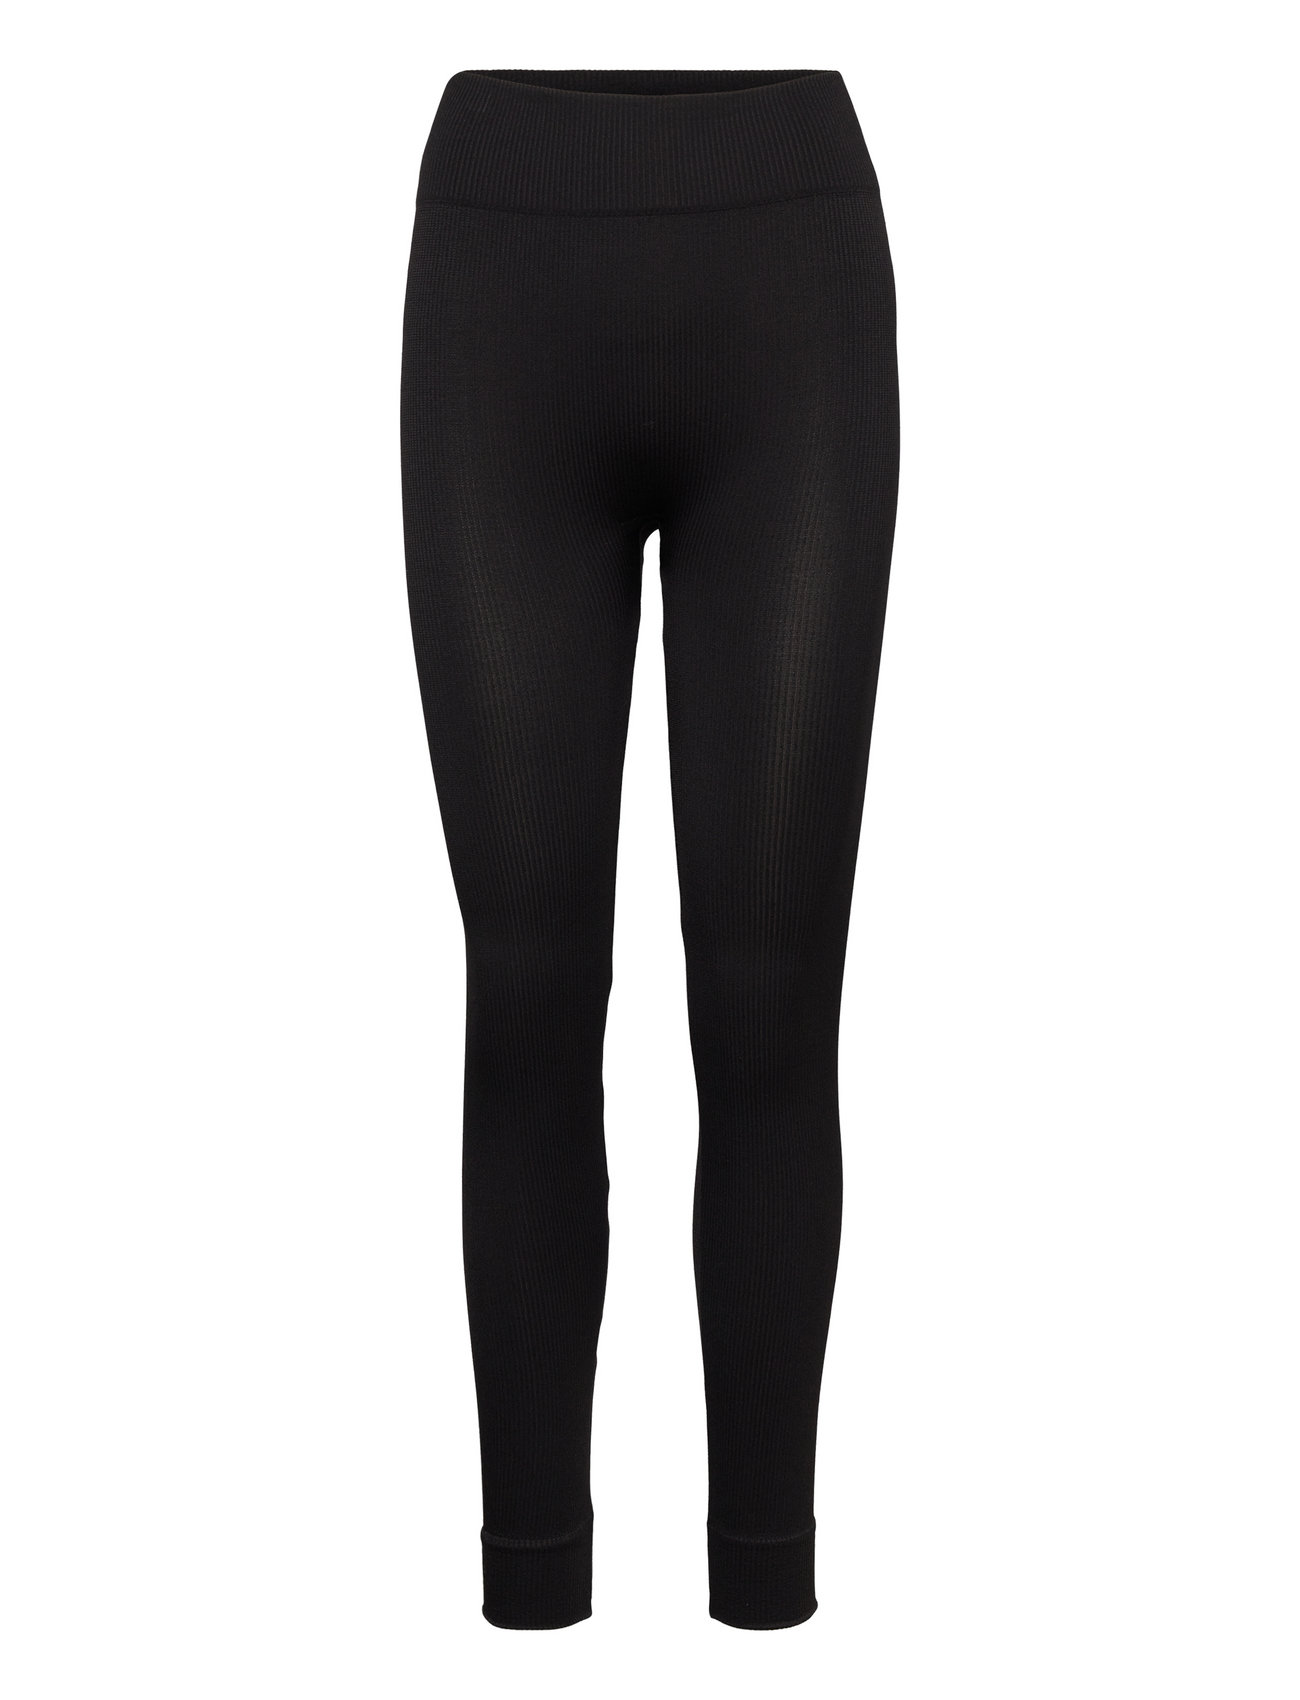 Hype The Detail Printed leggings, black • Price 31.85 €